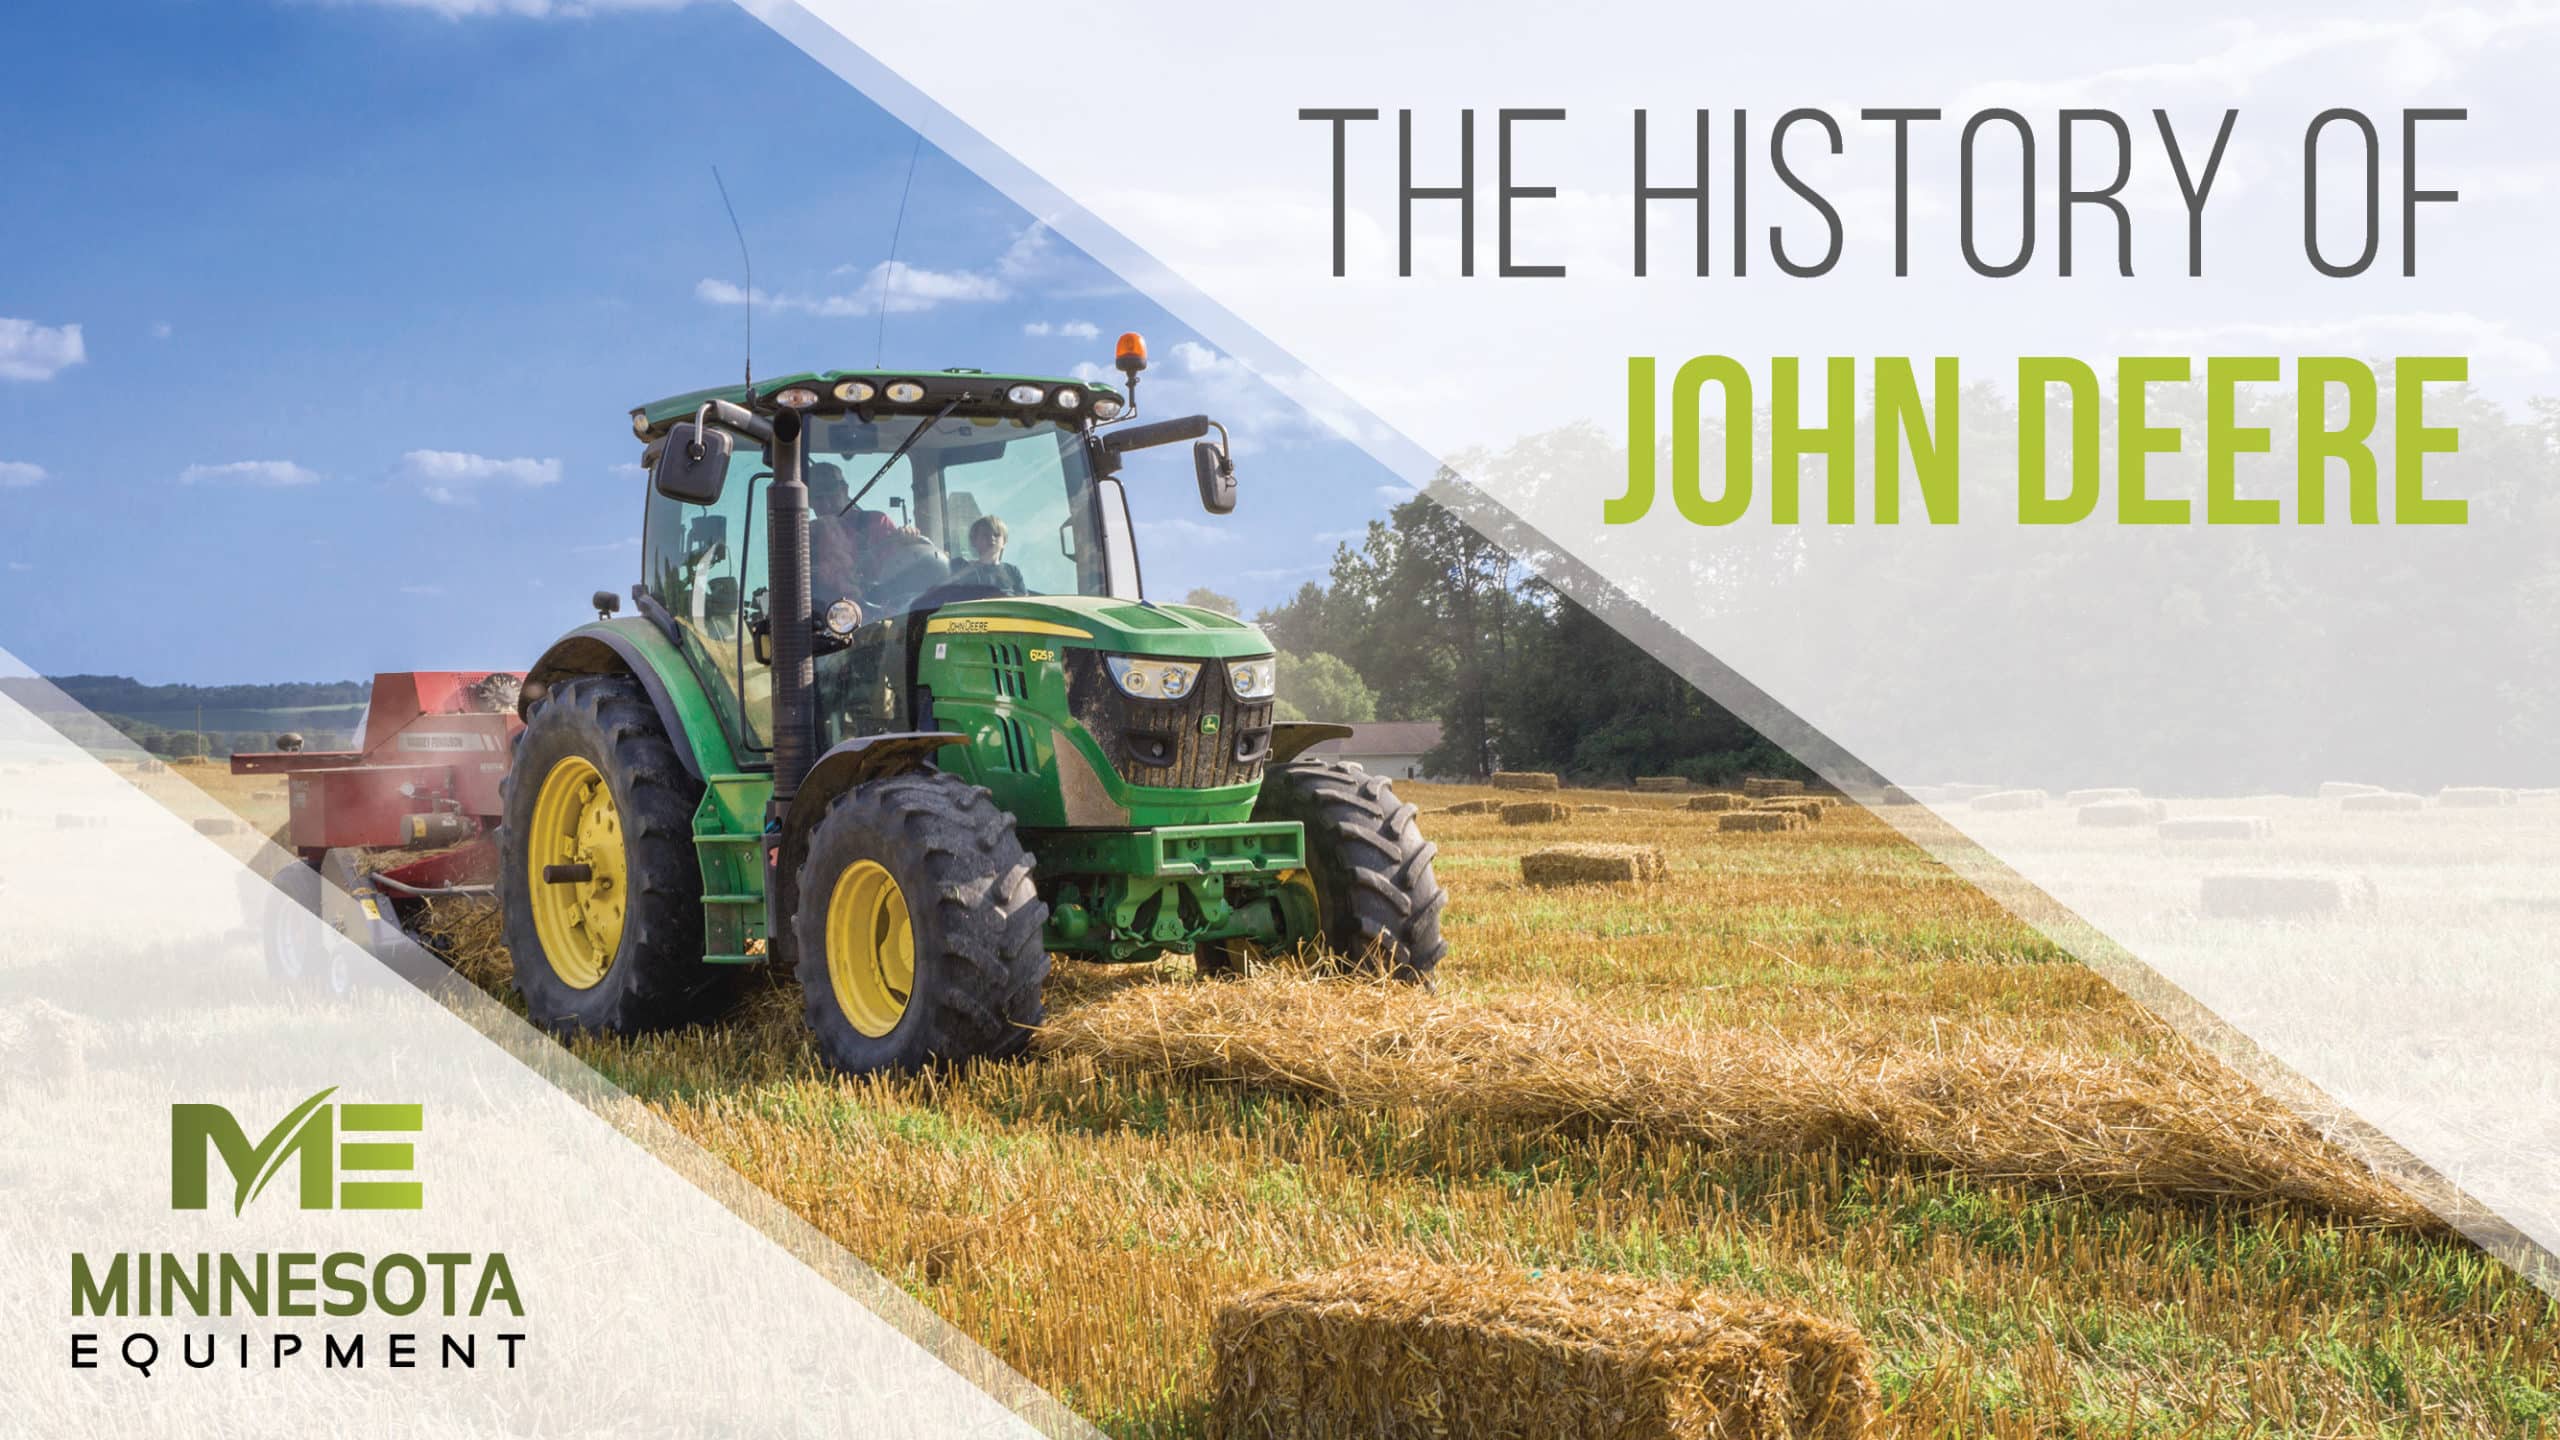 The History of John Deere Thumbnail image